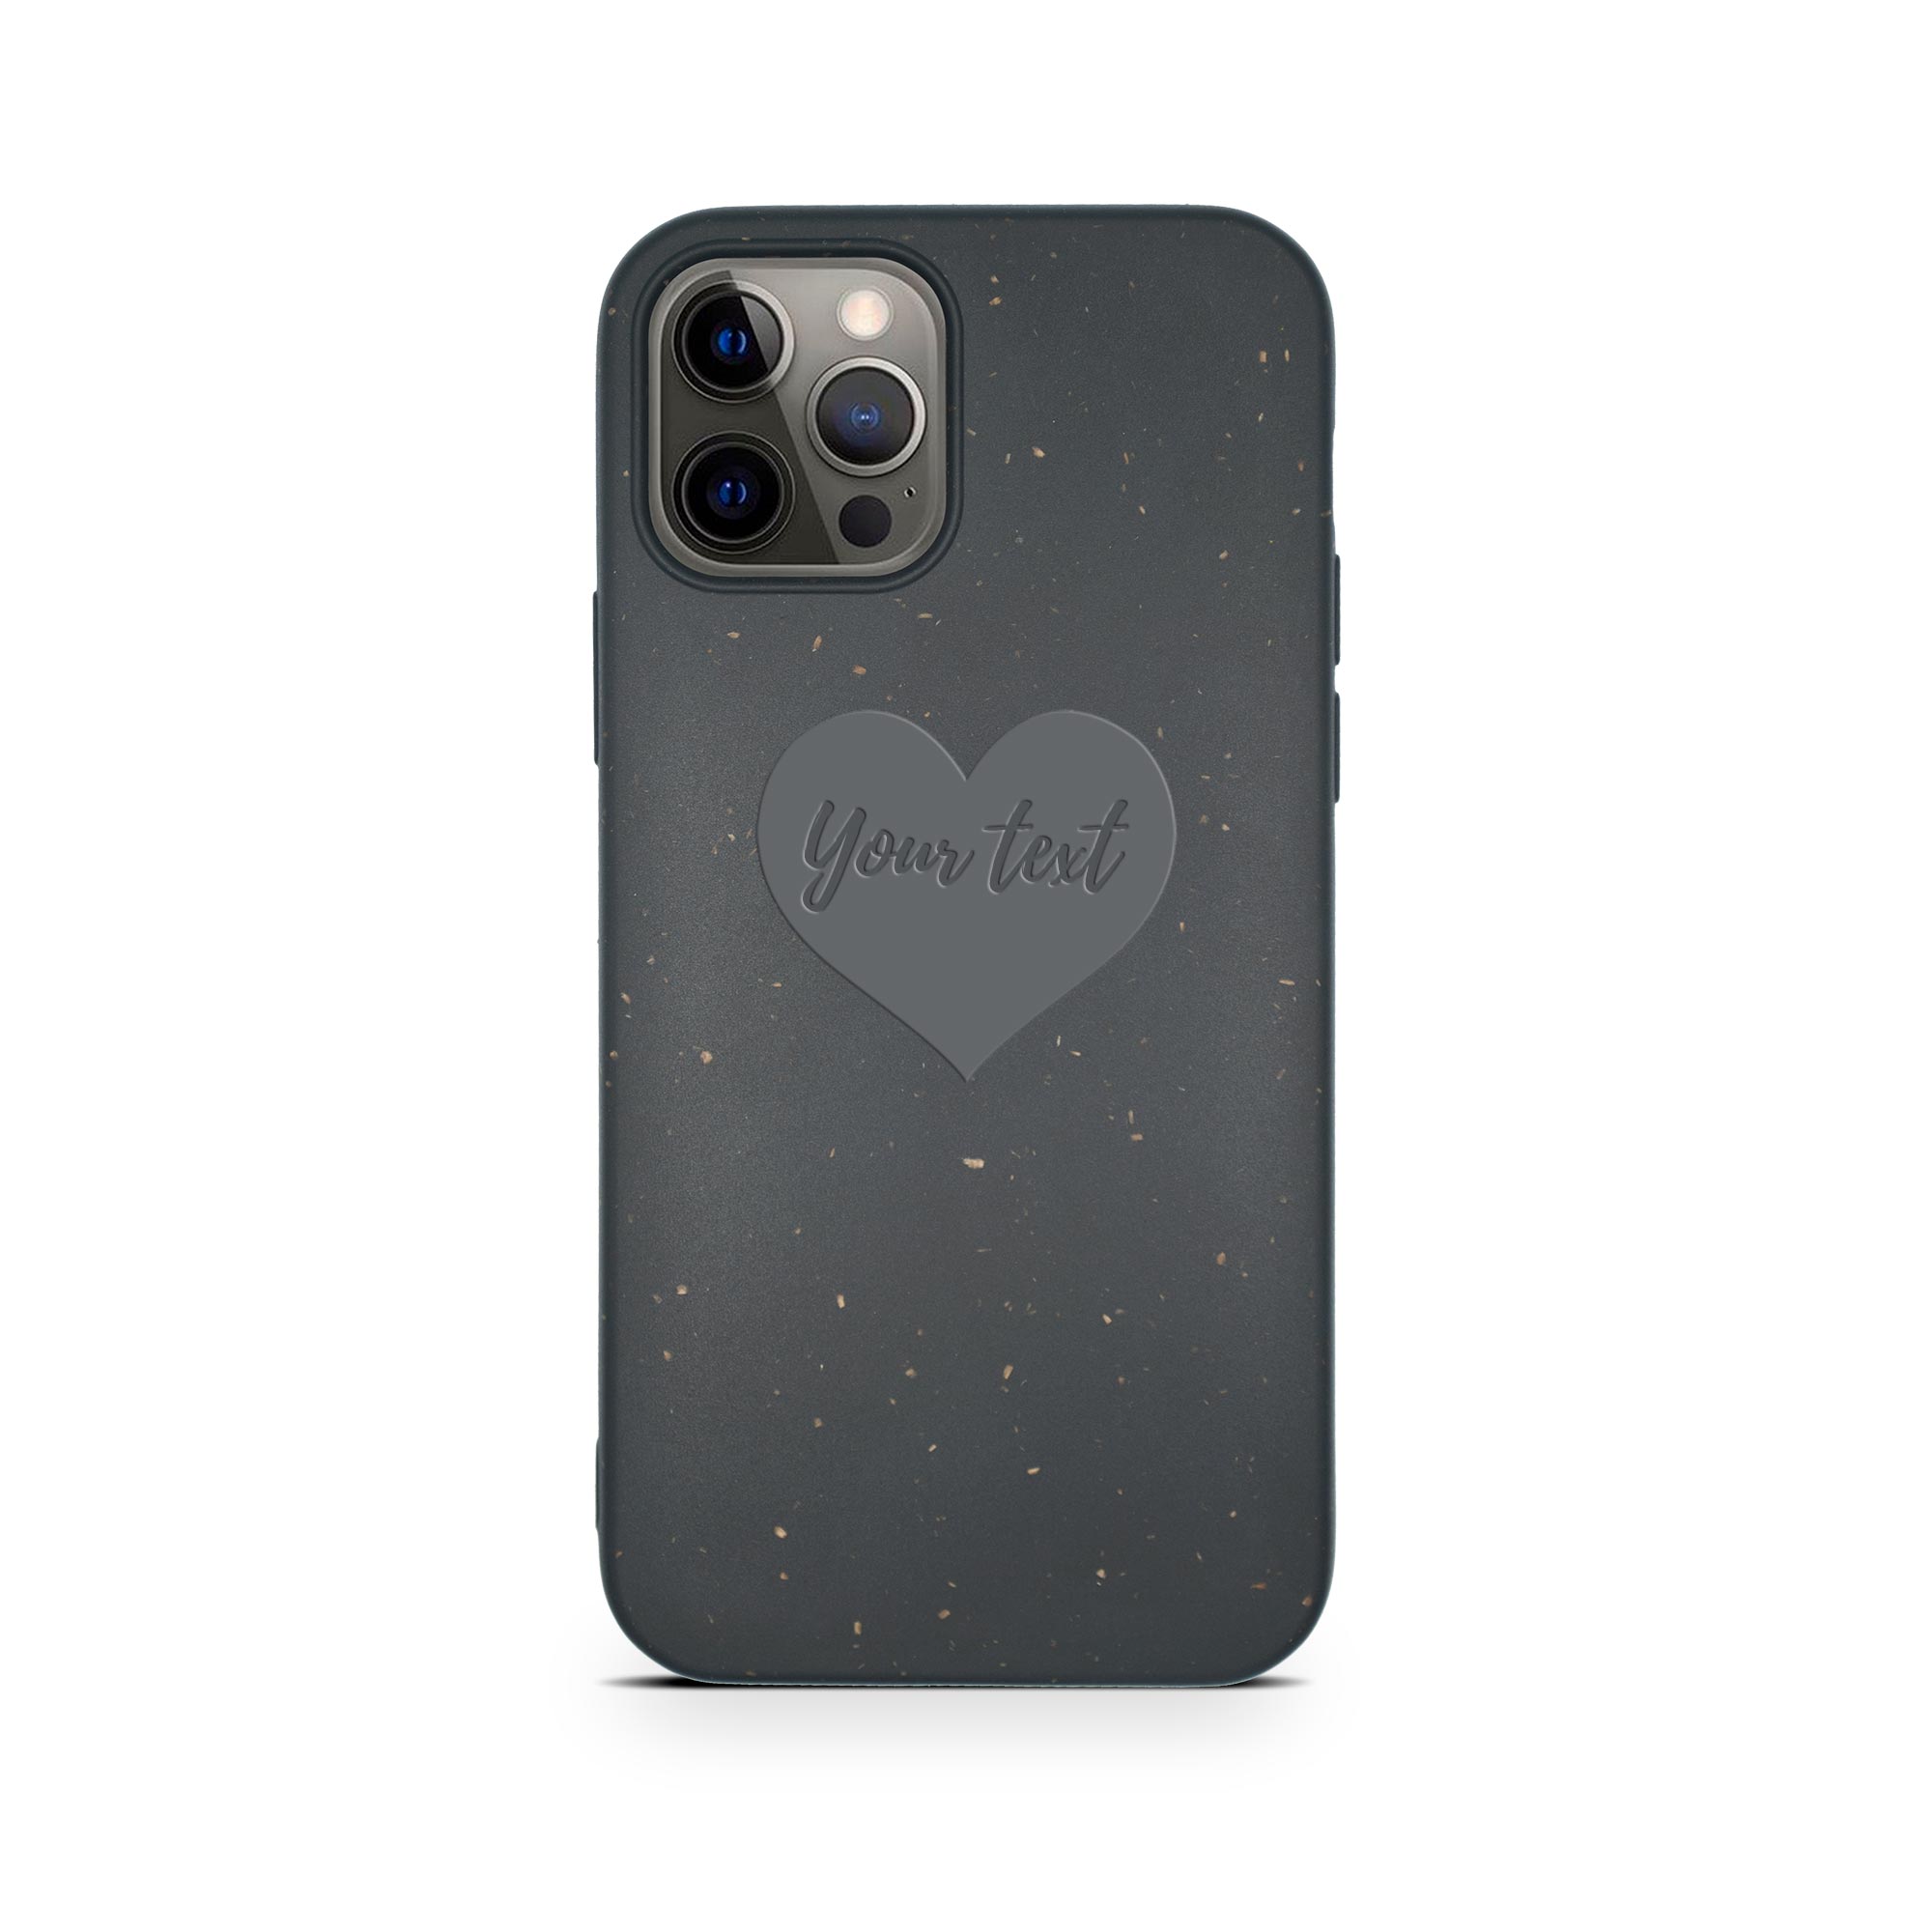 iPhone 12 Pro Max texto personalizado en carcasa de teléfono con forma de corazón